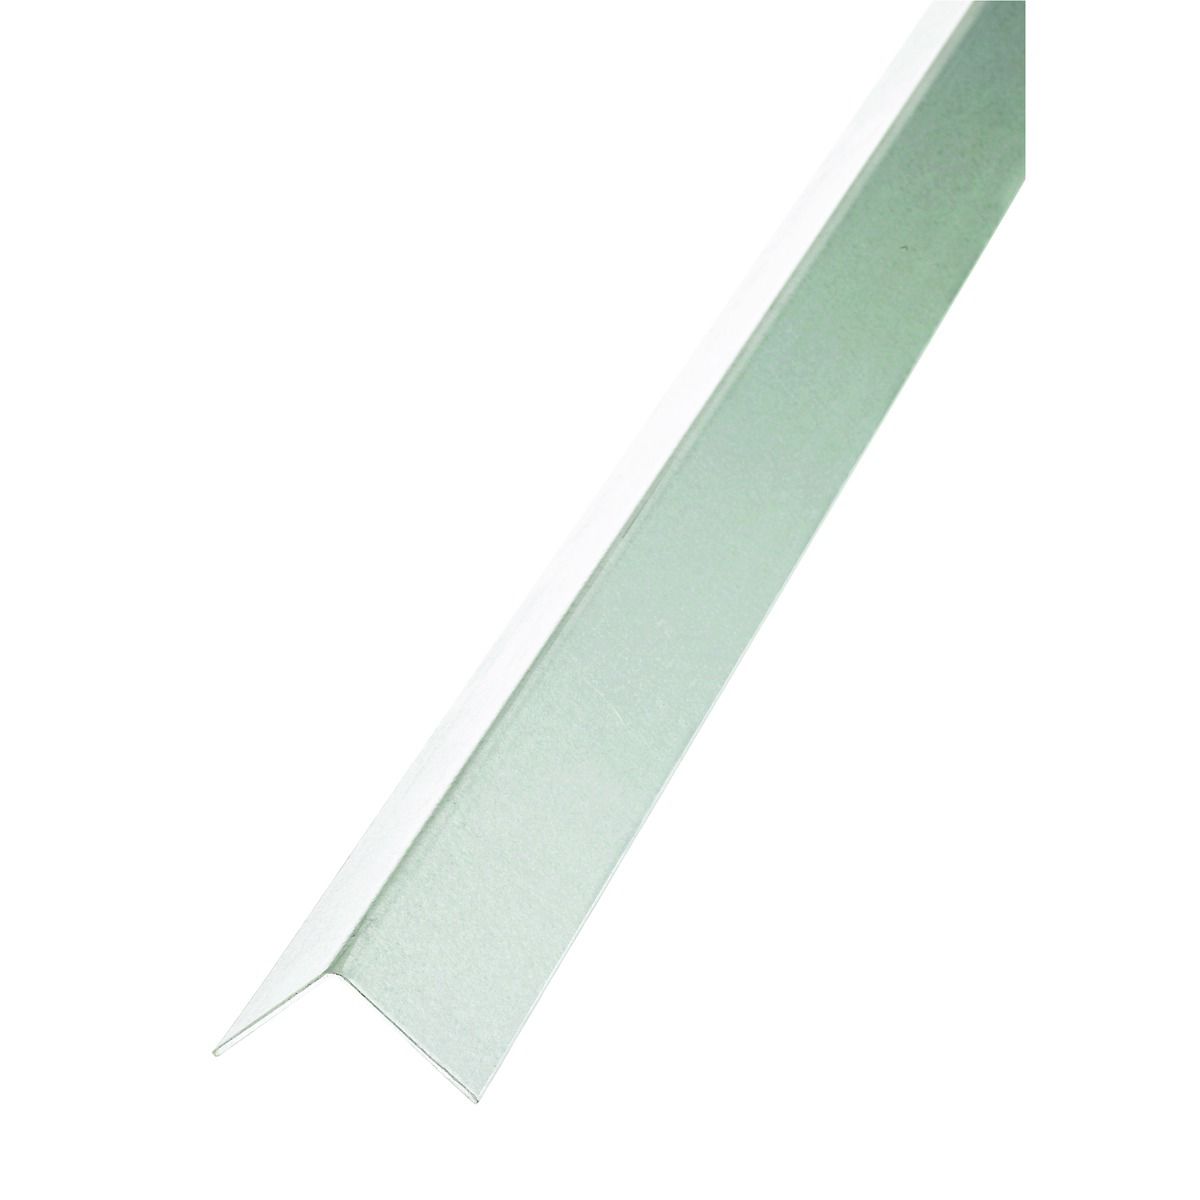 Image of Wickes Angle - Galvanised Steel 23.5 x 43.5mm x 1m